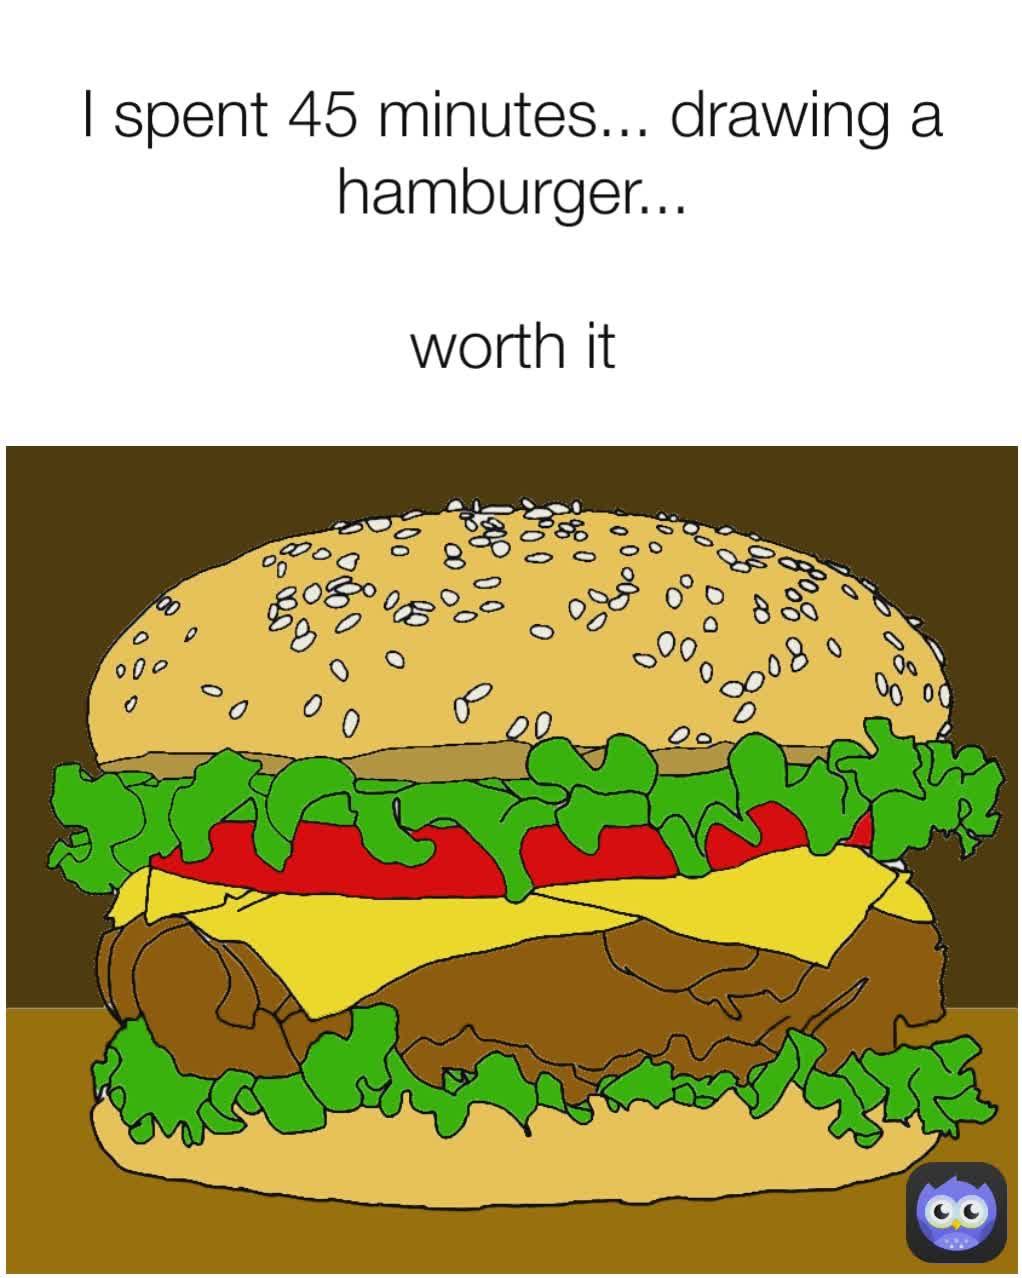 I spent 45 minutes... drawing a hamburger...

worth it